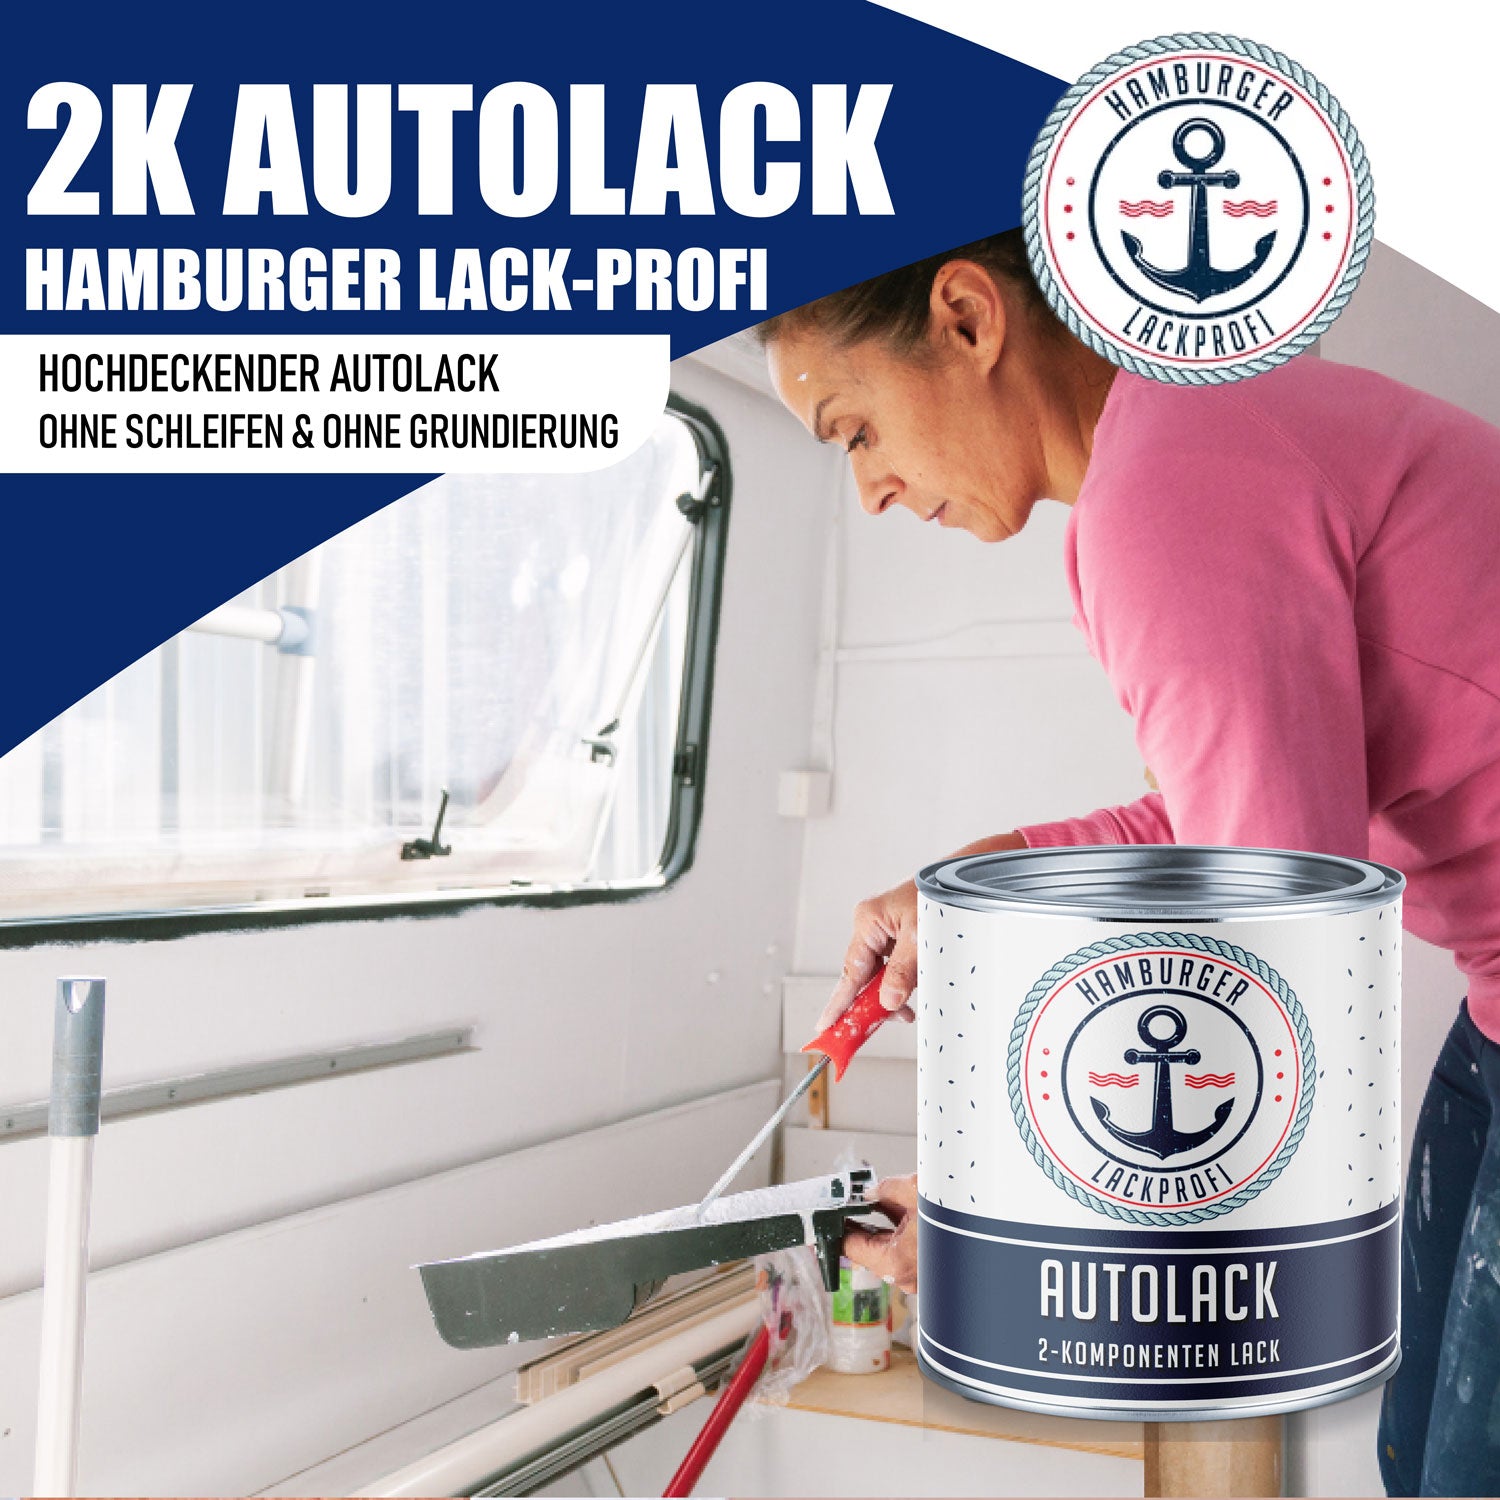 Hamburger Lack-Profi 2K Autolack in Olivgelb RAL 1020 mit Lackierset (X300) & Verdünnung (1 L) - 30% Sparangebot